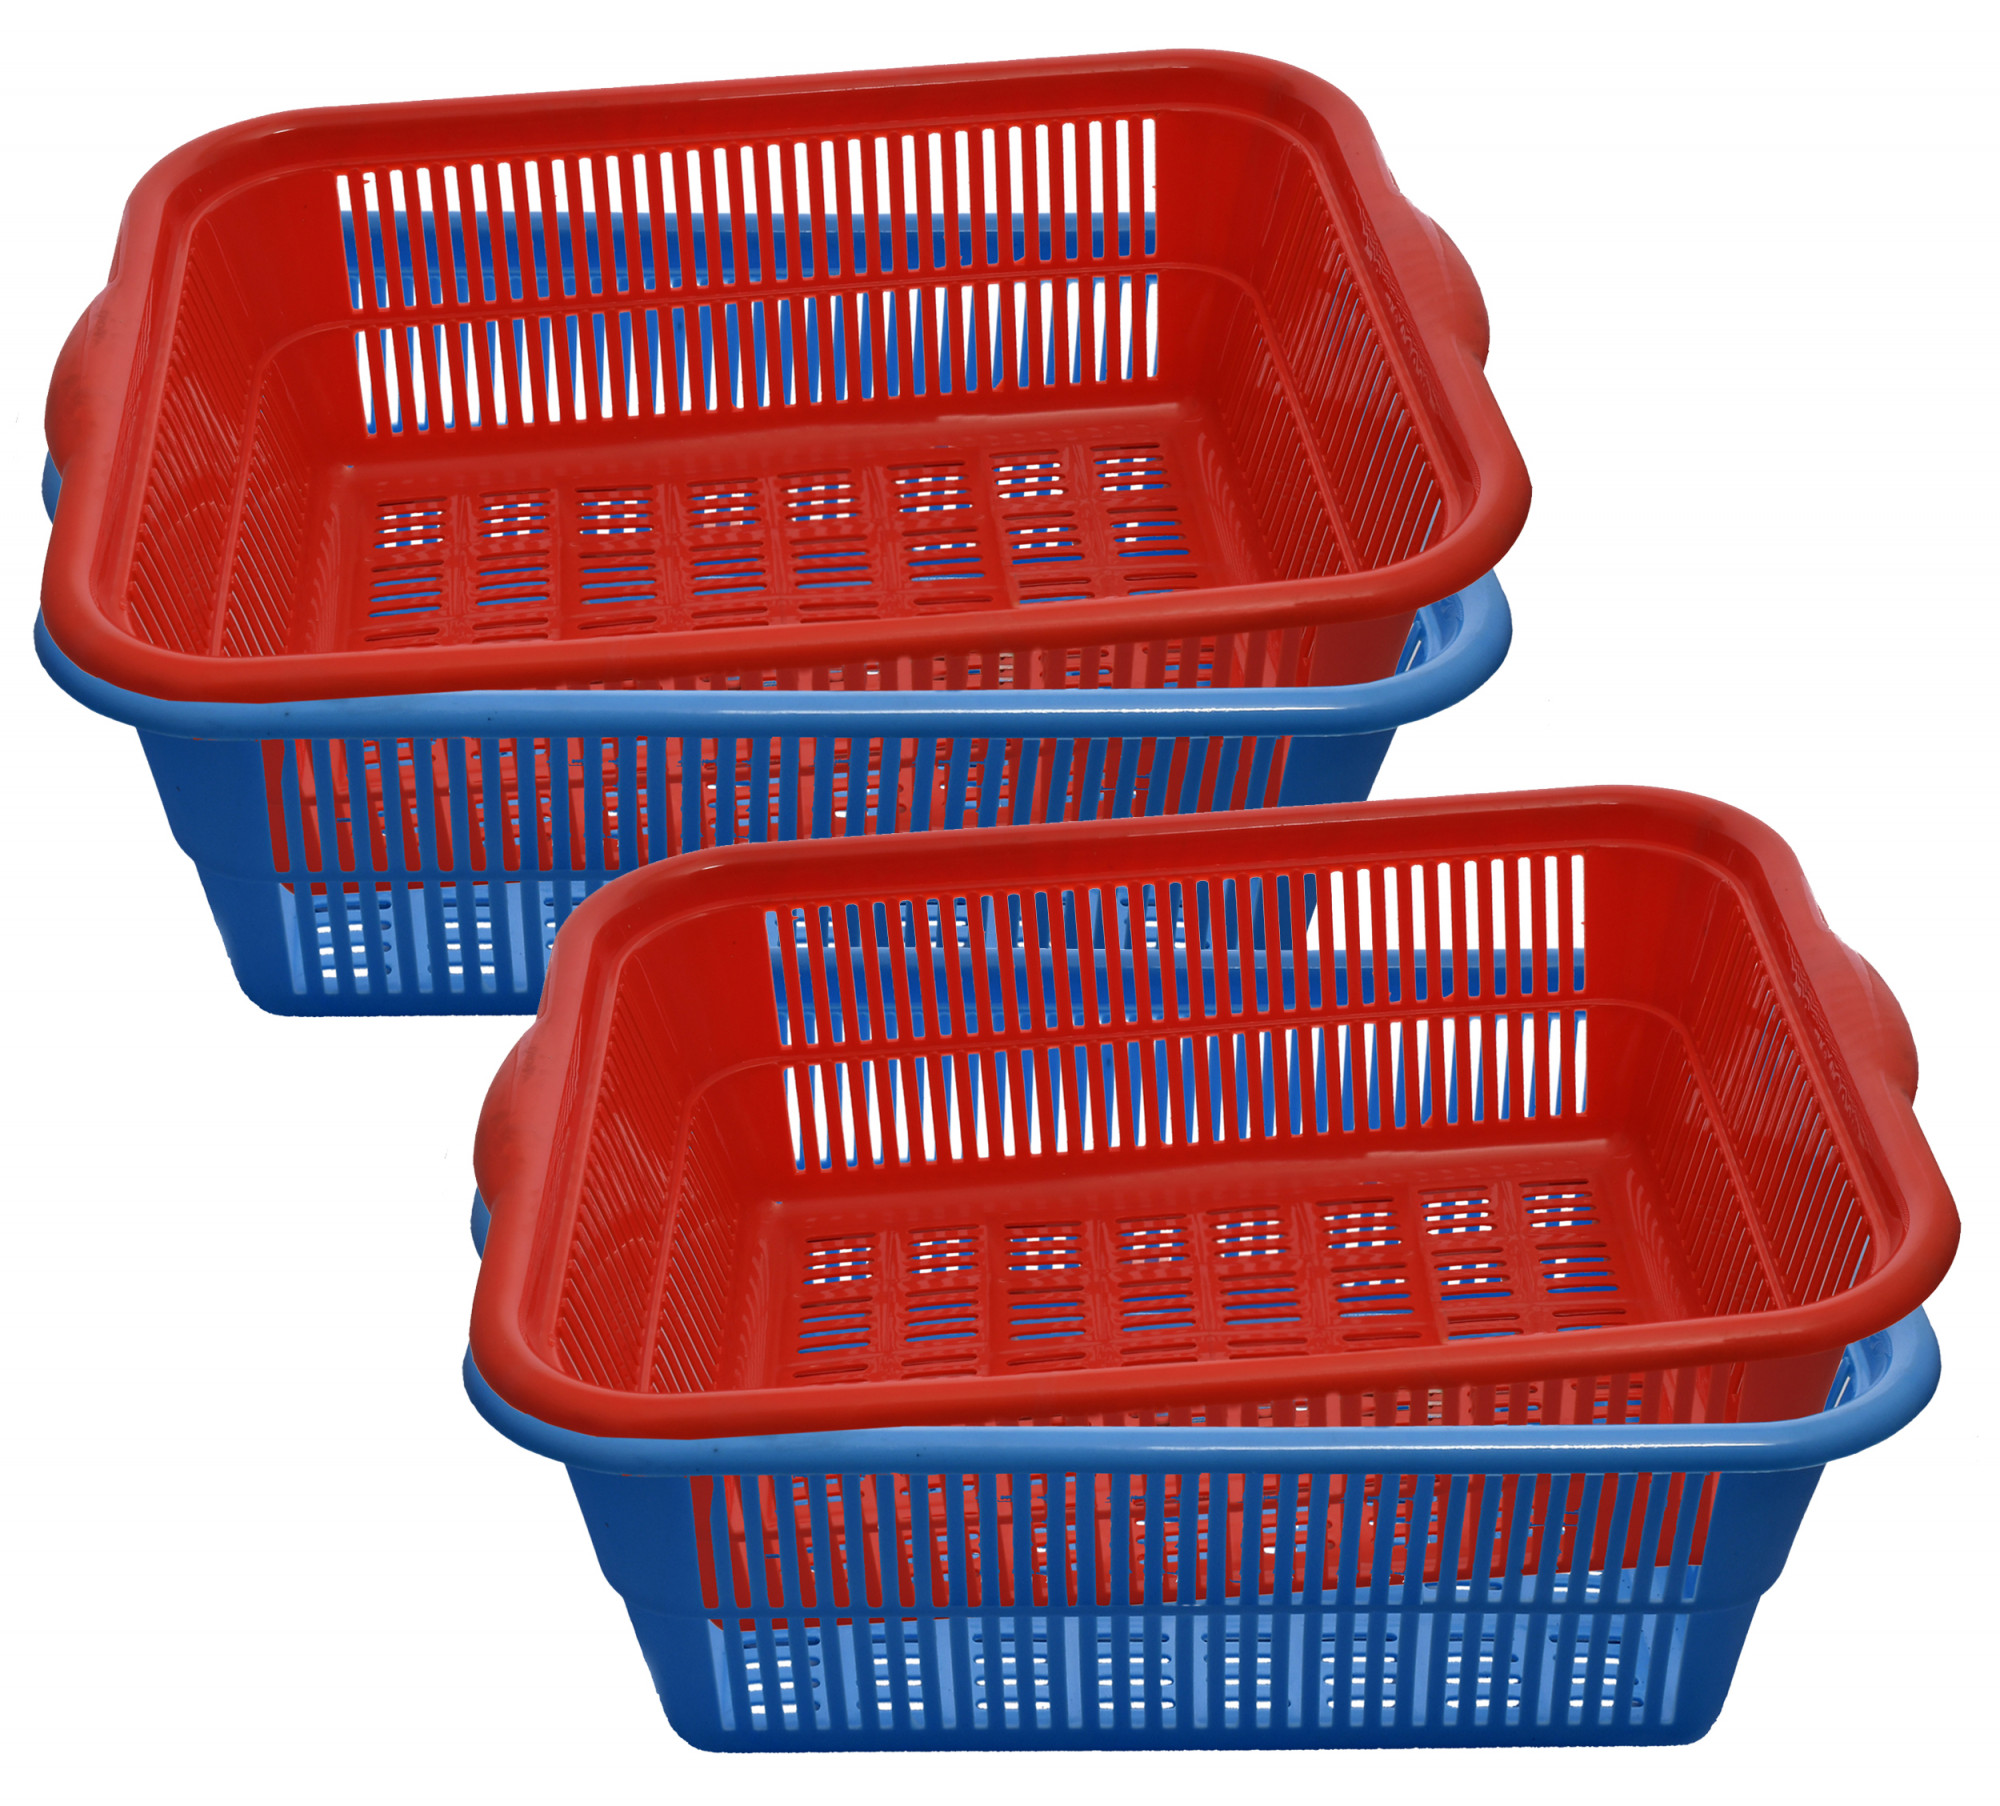 Kuber Industries Plastic Kitchen Dish Rack Drainer Vegetables And Fruits Basket Dish Rack Multipurpose Organizers ,Medium Size,Blue & Red